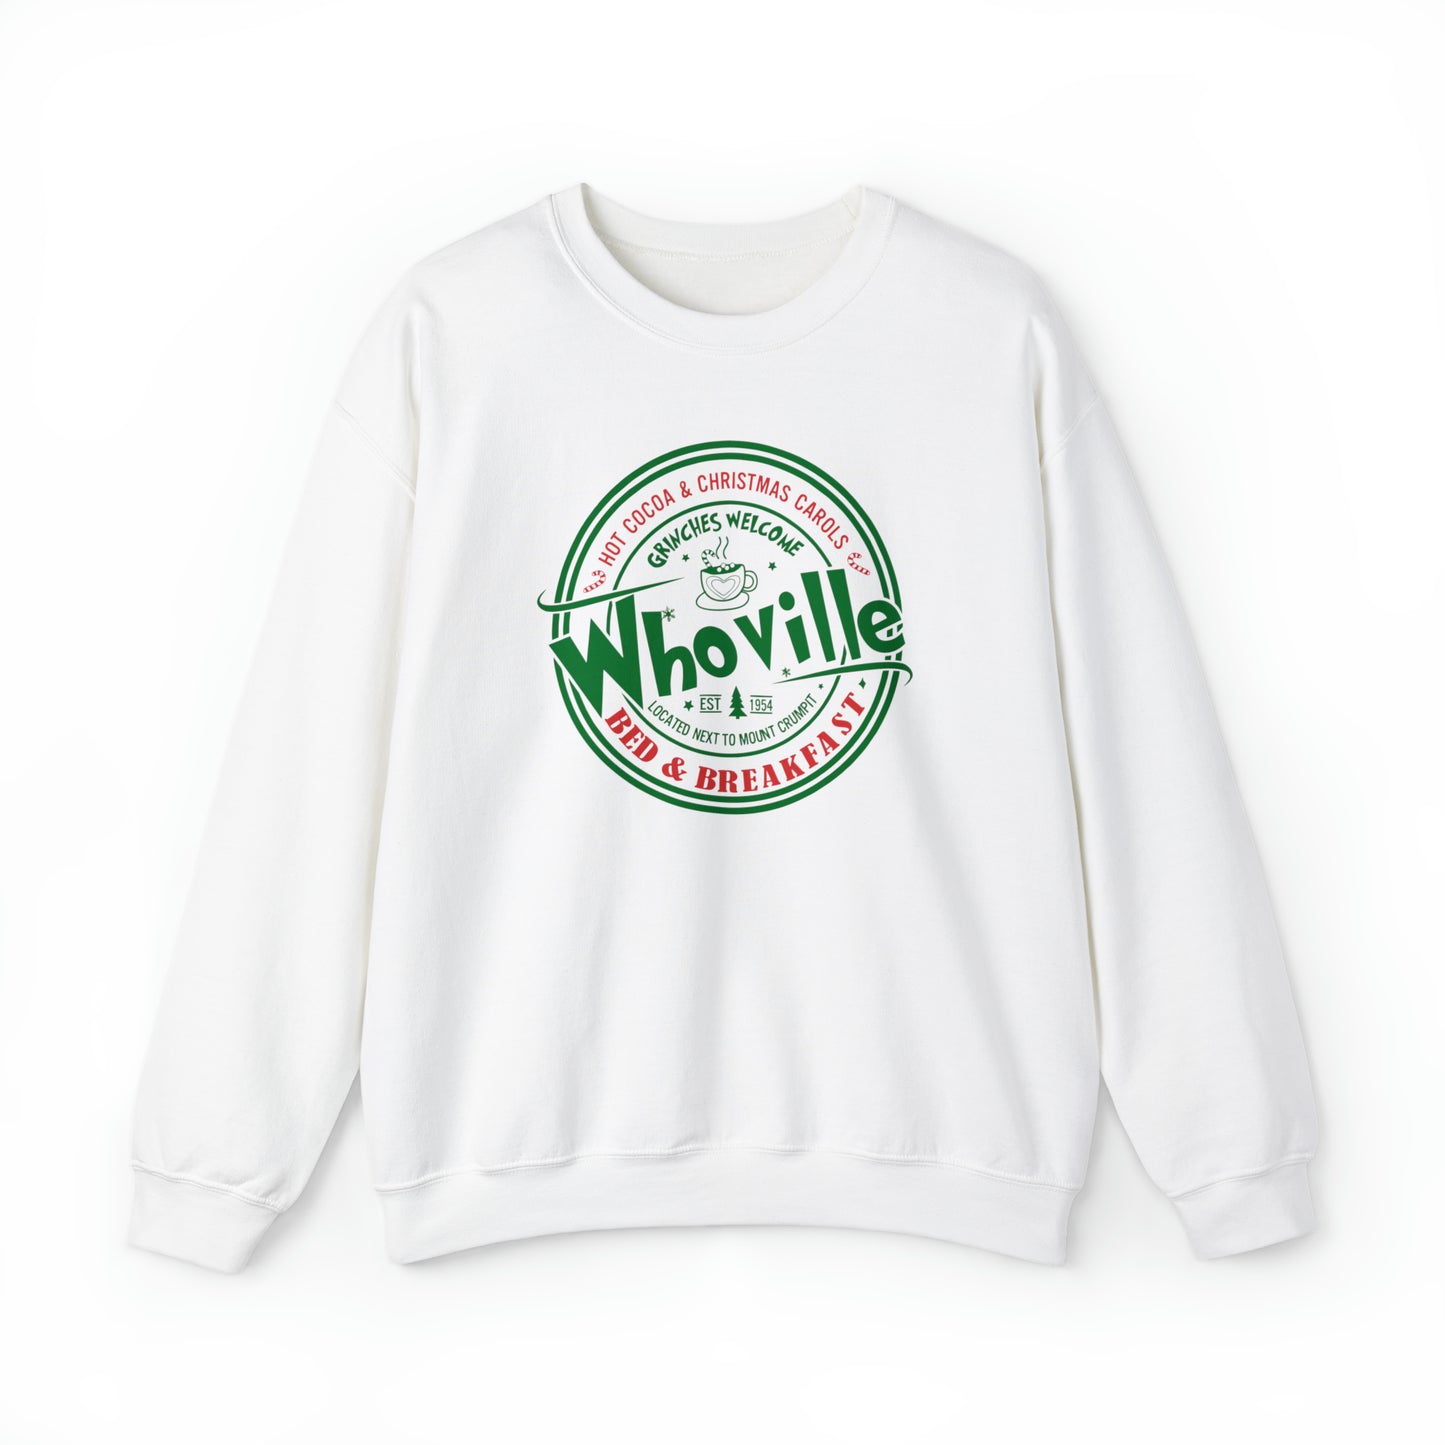 Whoville Bed & Breakfast Crewneck Sweatshirt